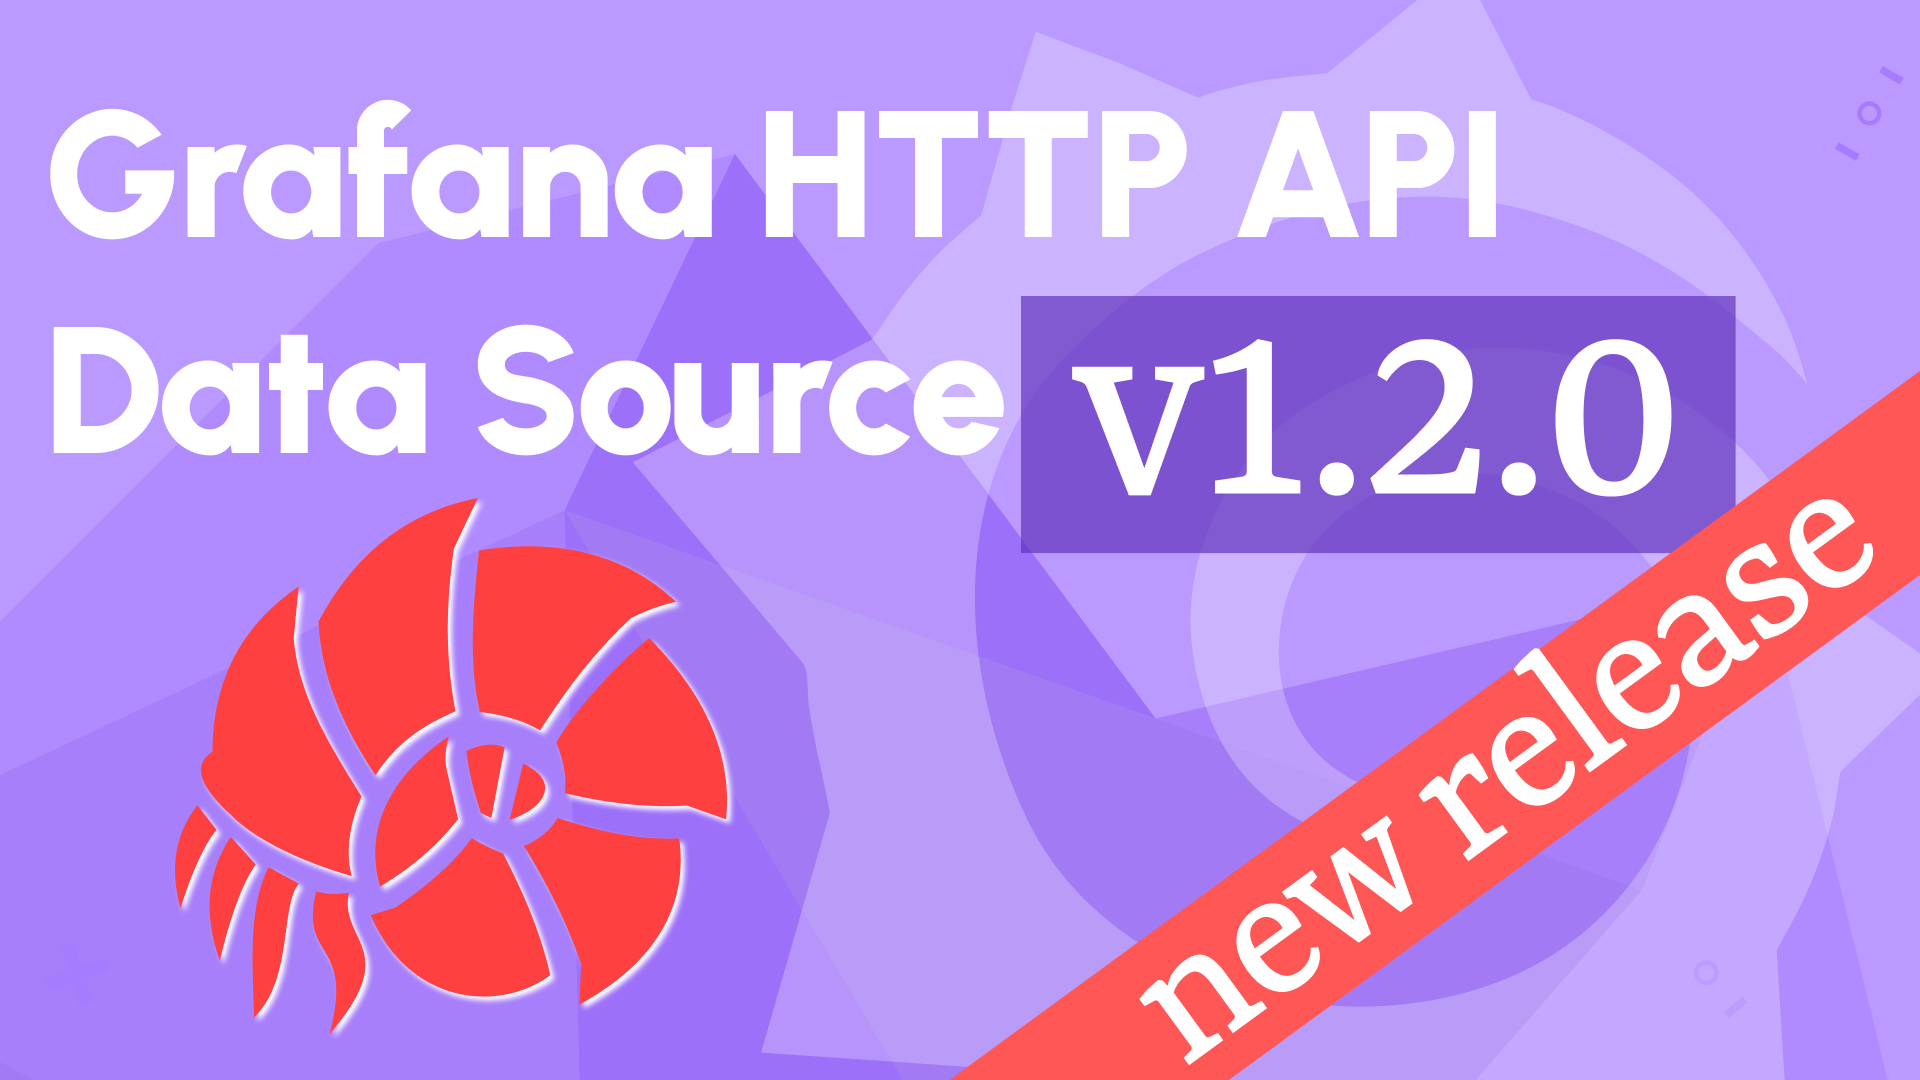 Grafana HTTP API Data Source 1.2.0